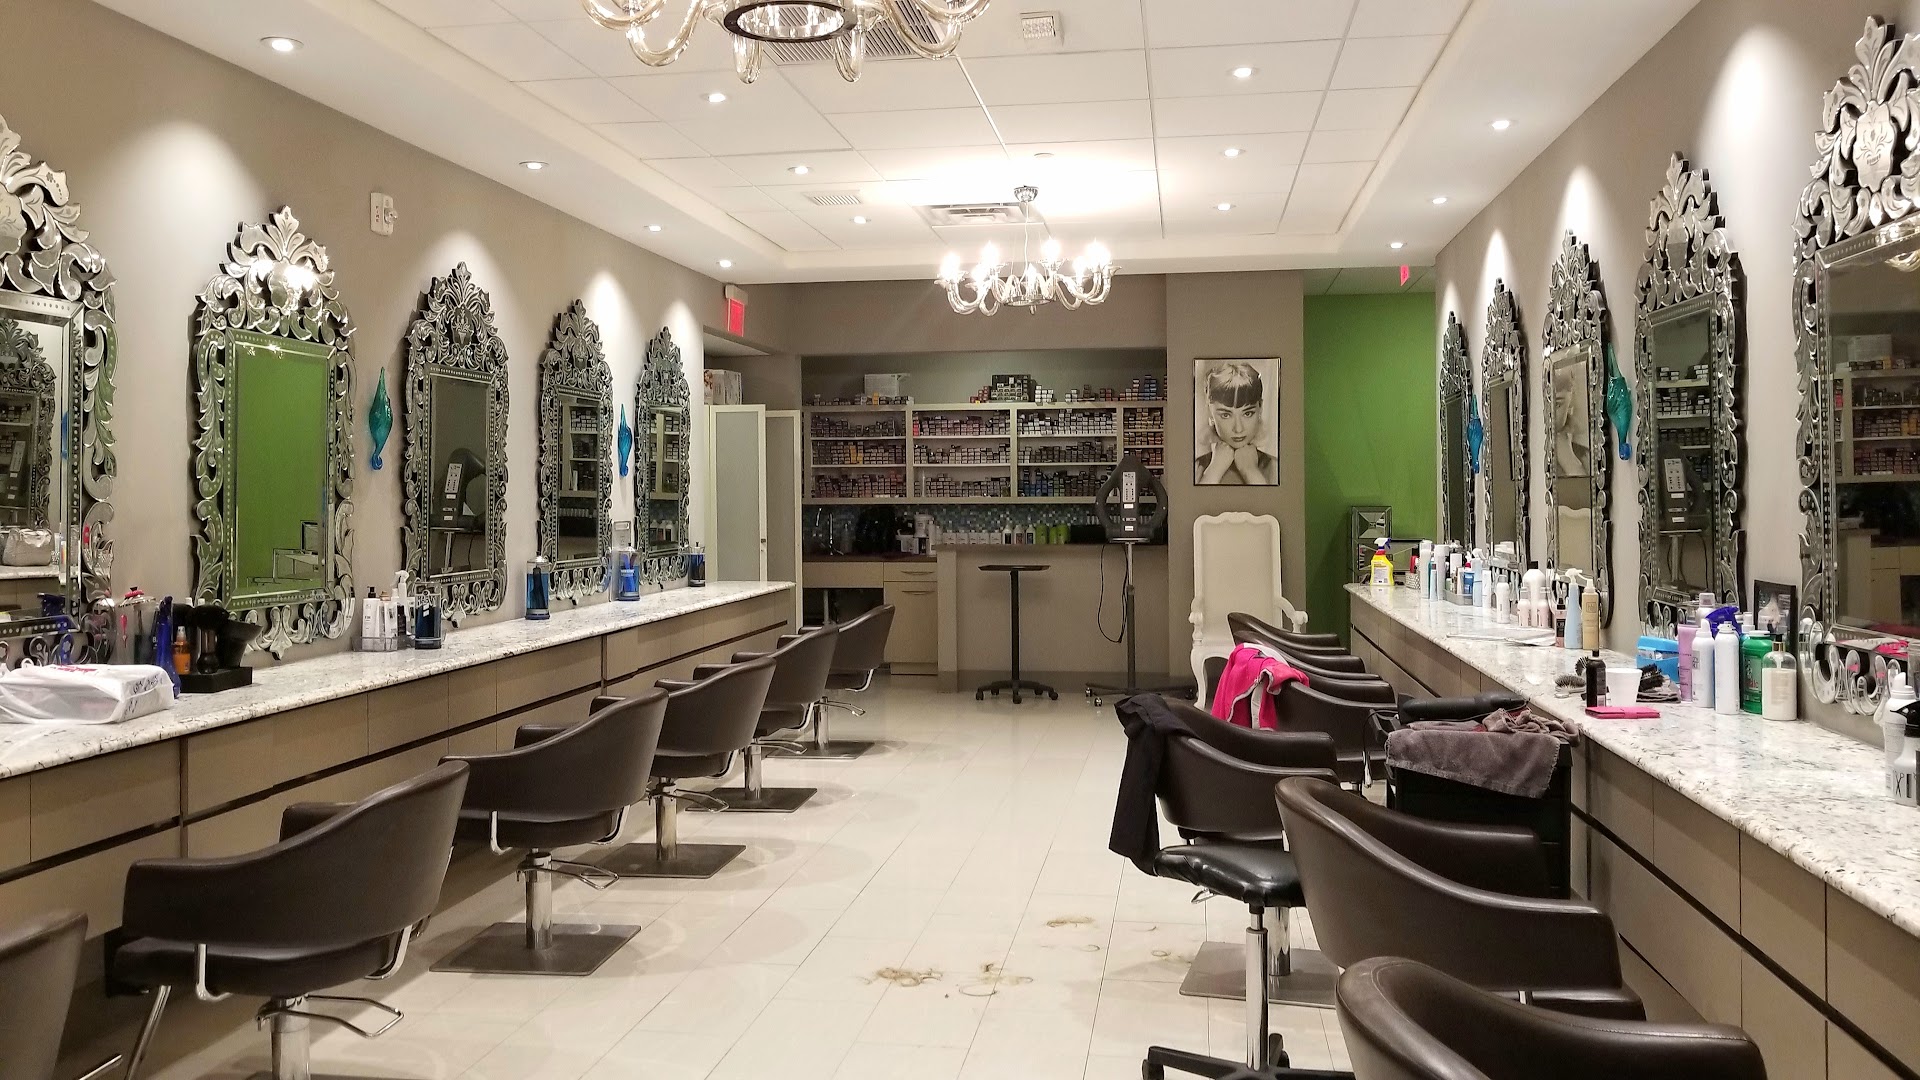 Taglio Salon & Barbershop by Donnarose | Hair salon in Marlton, NJ